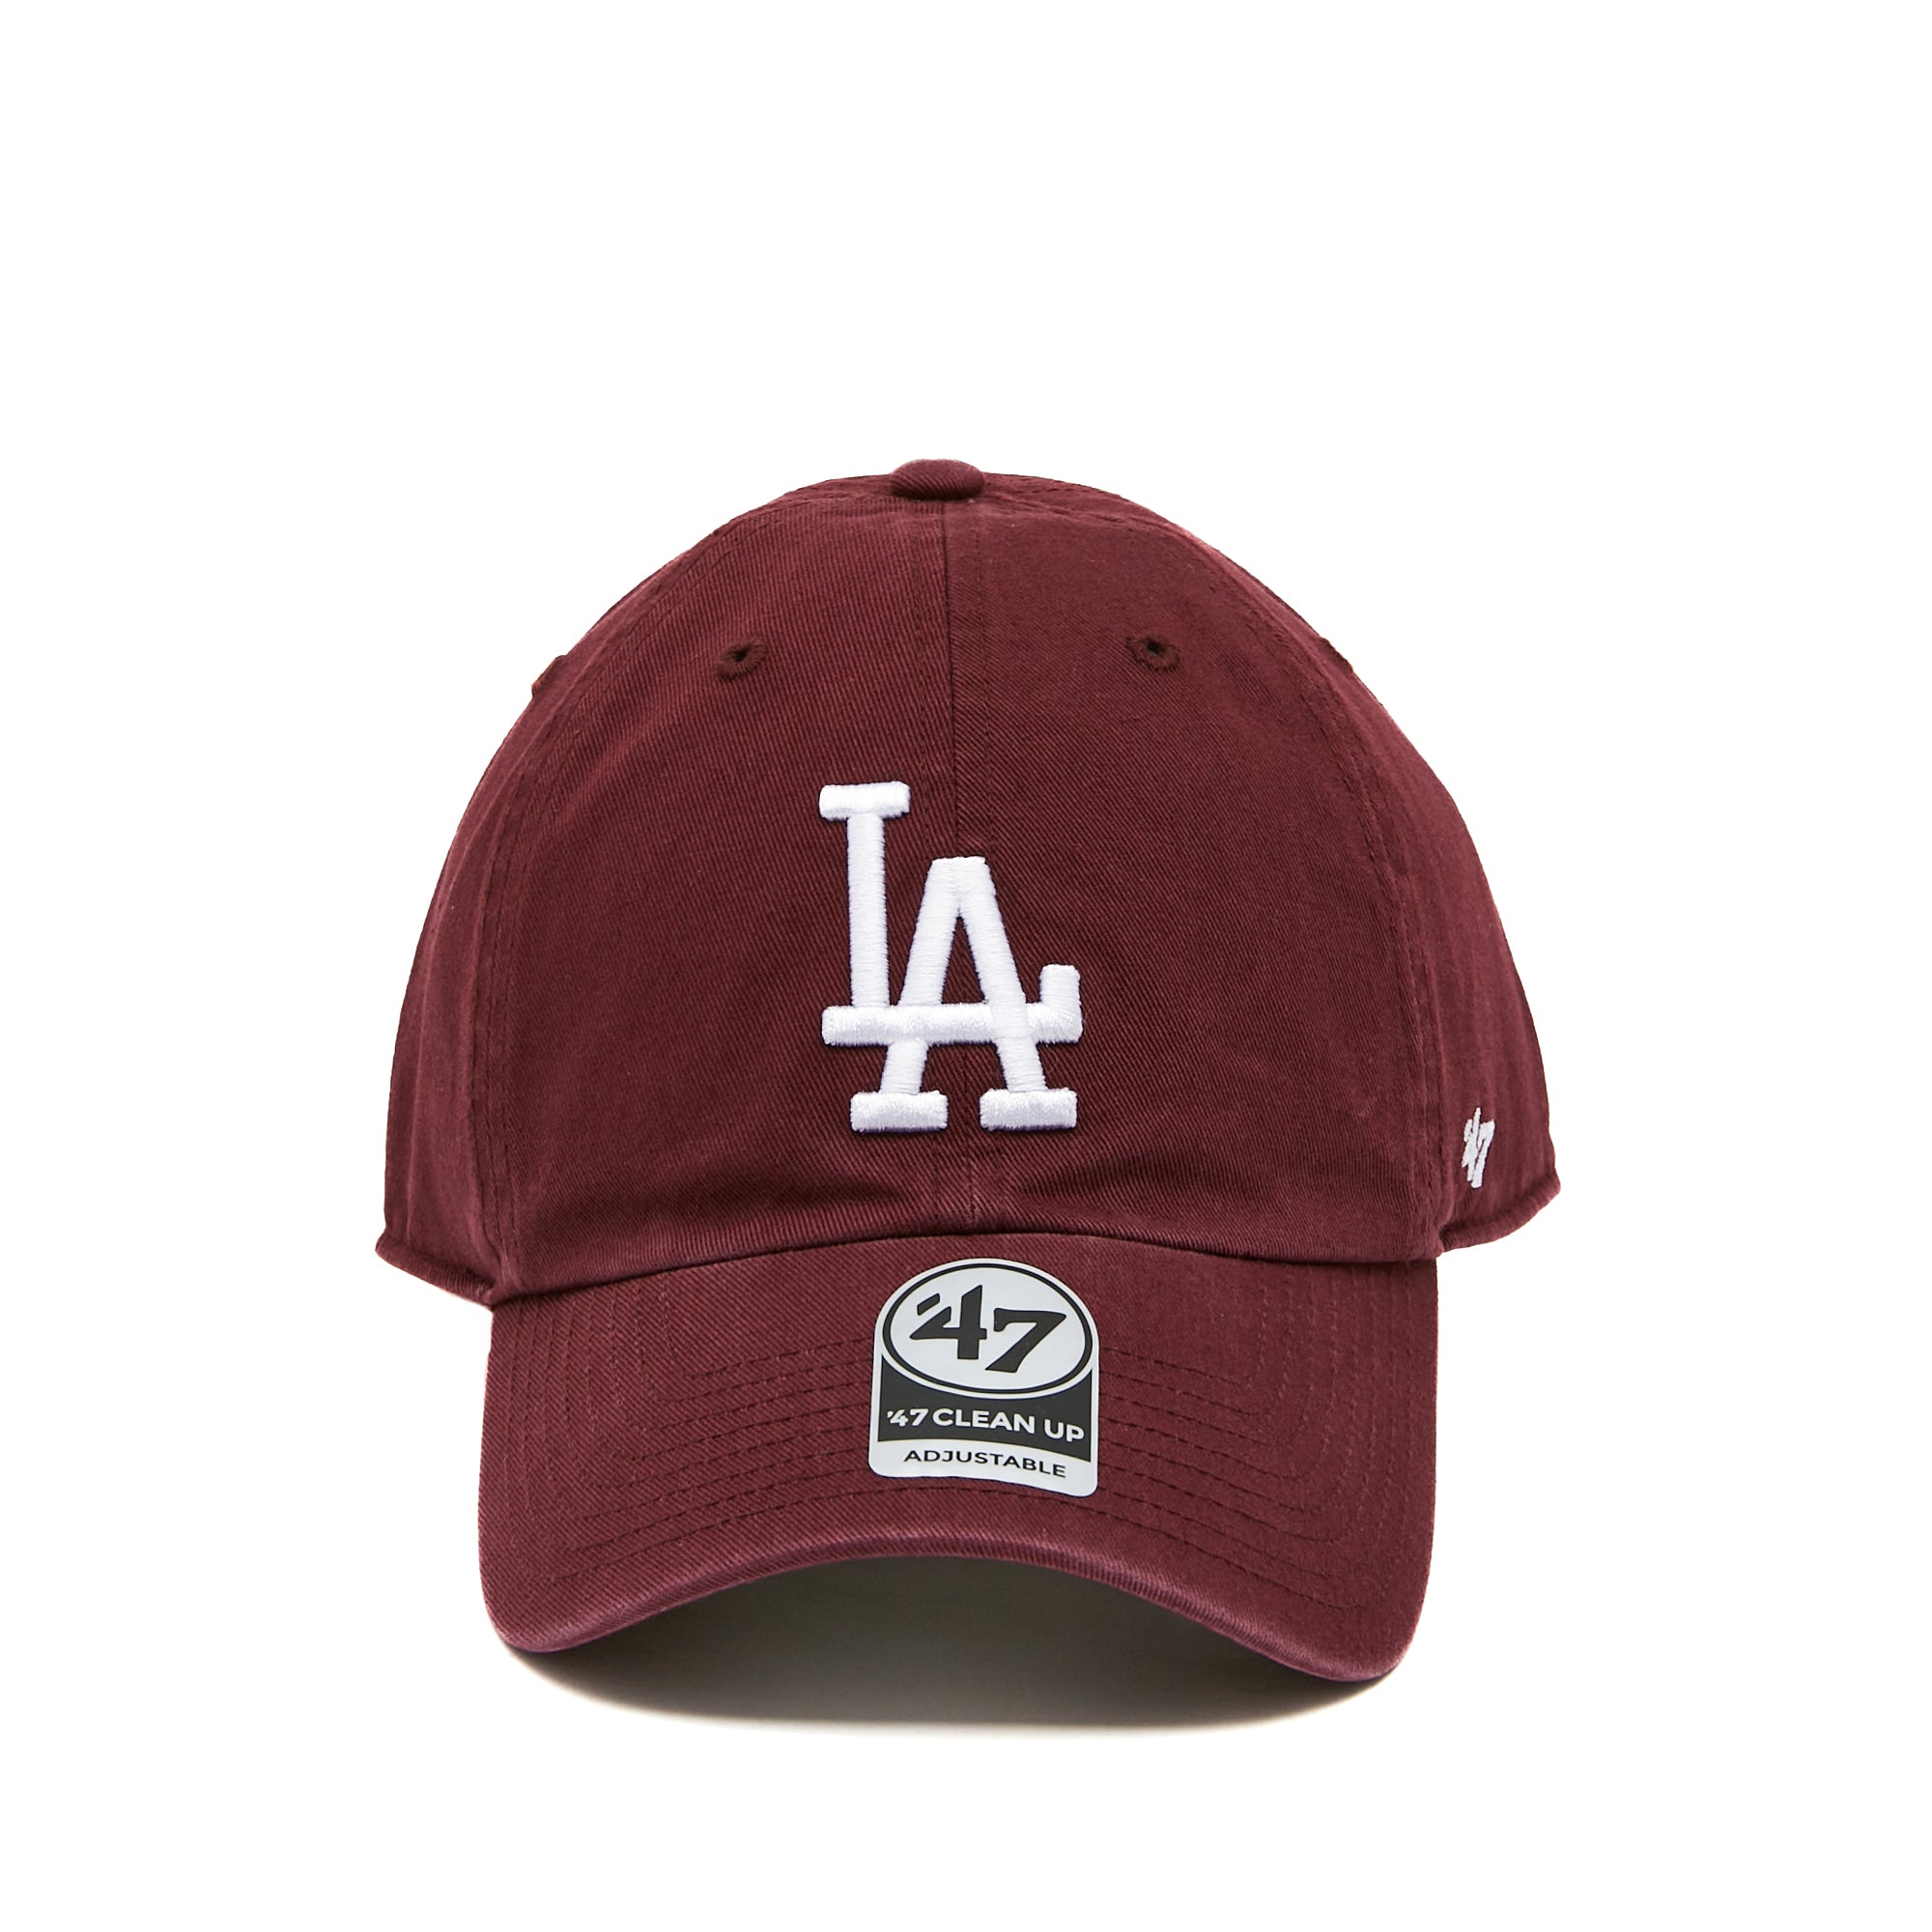 MLB Los Angeles Dodgers '47 Clean Up Cap Dark Maroon One Size